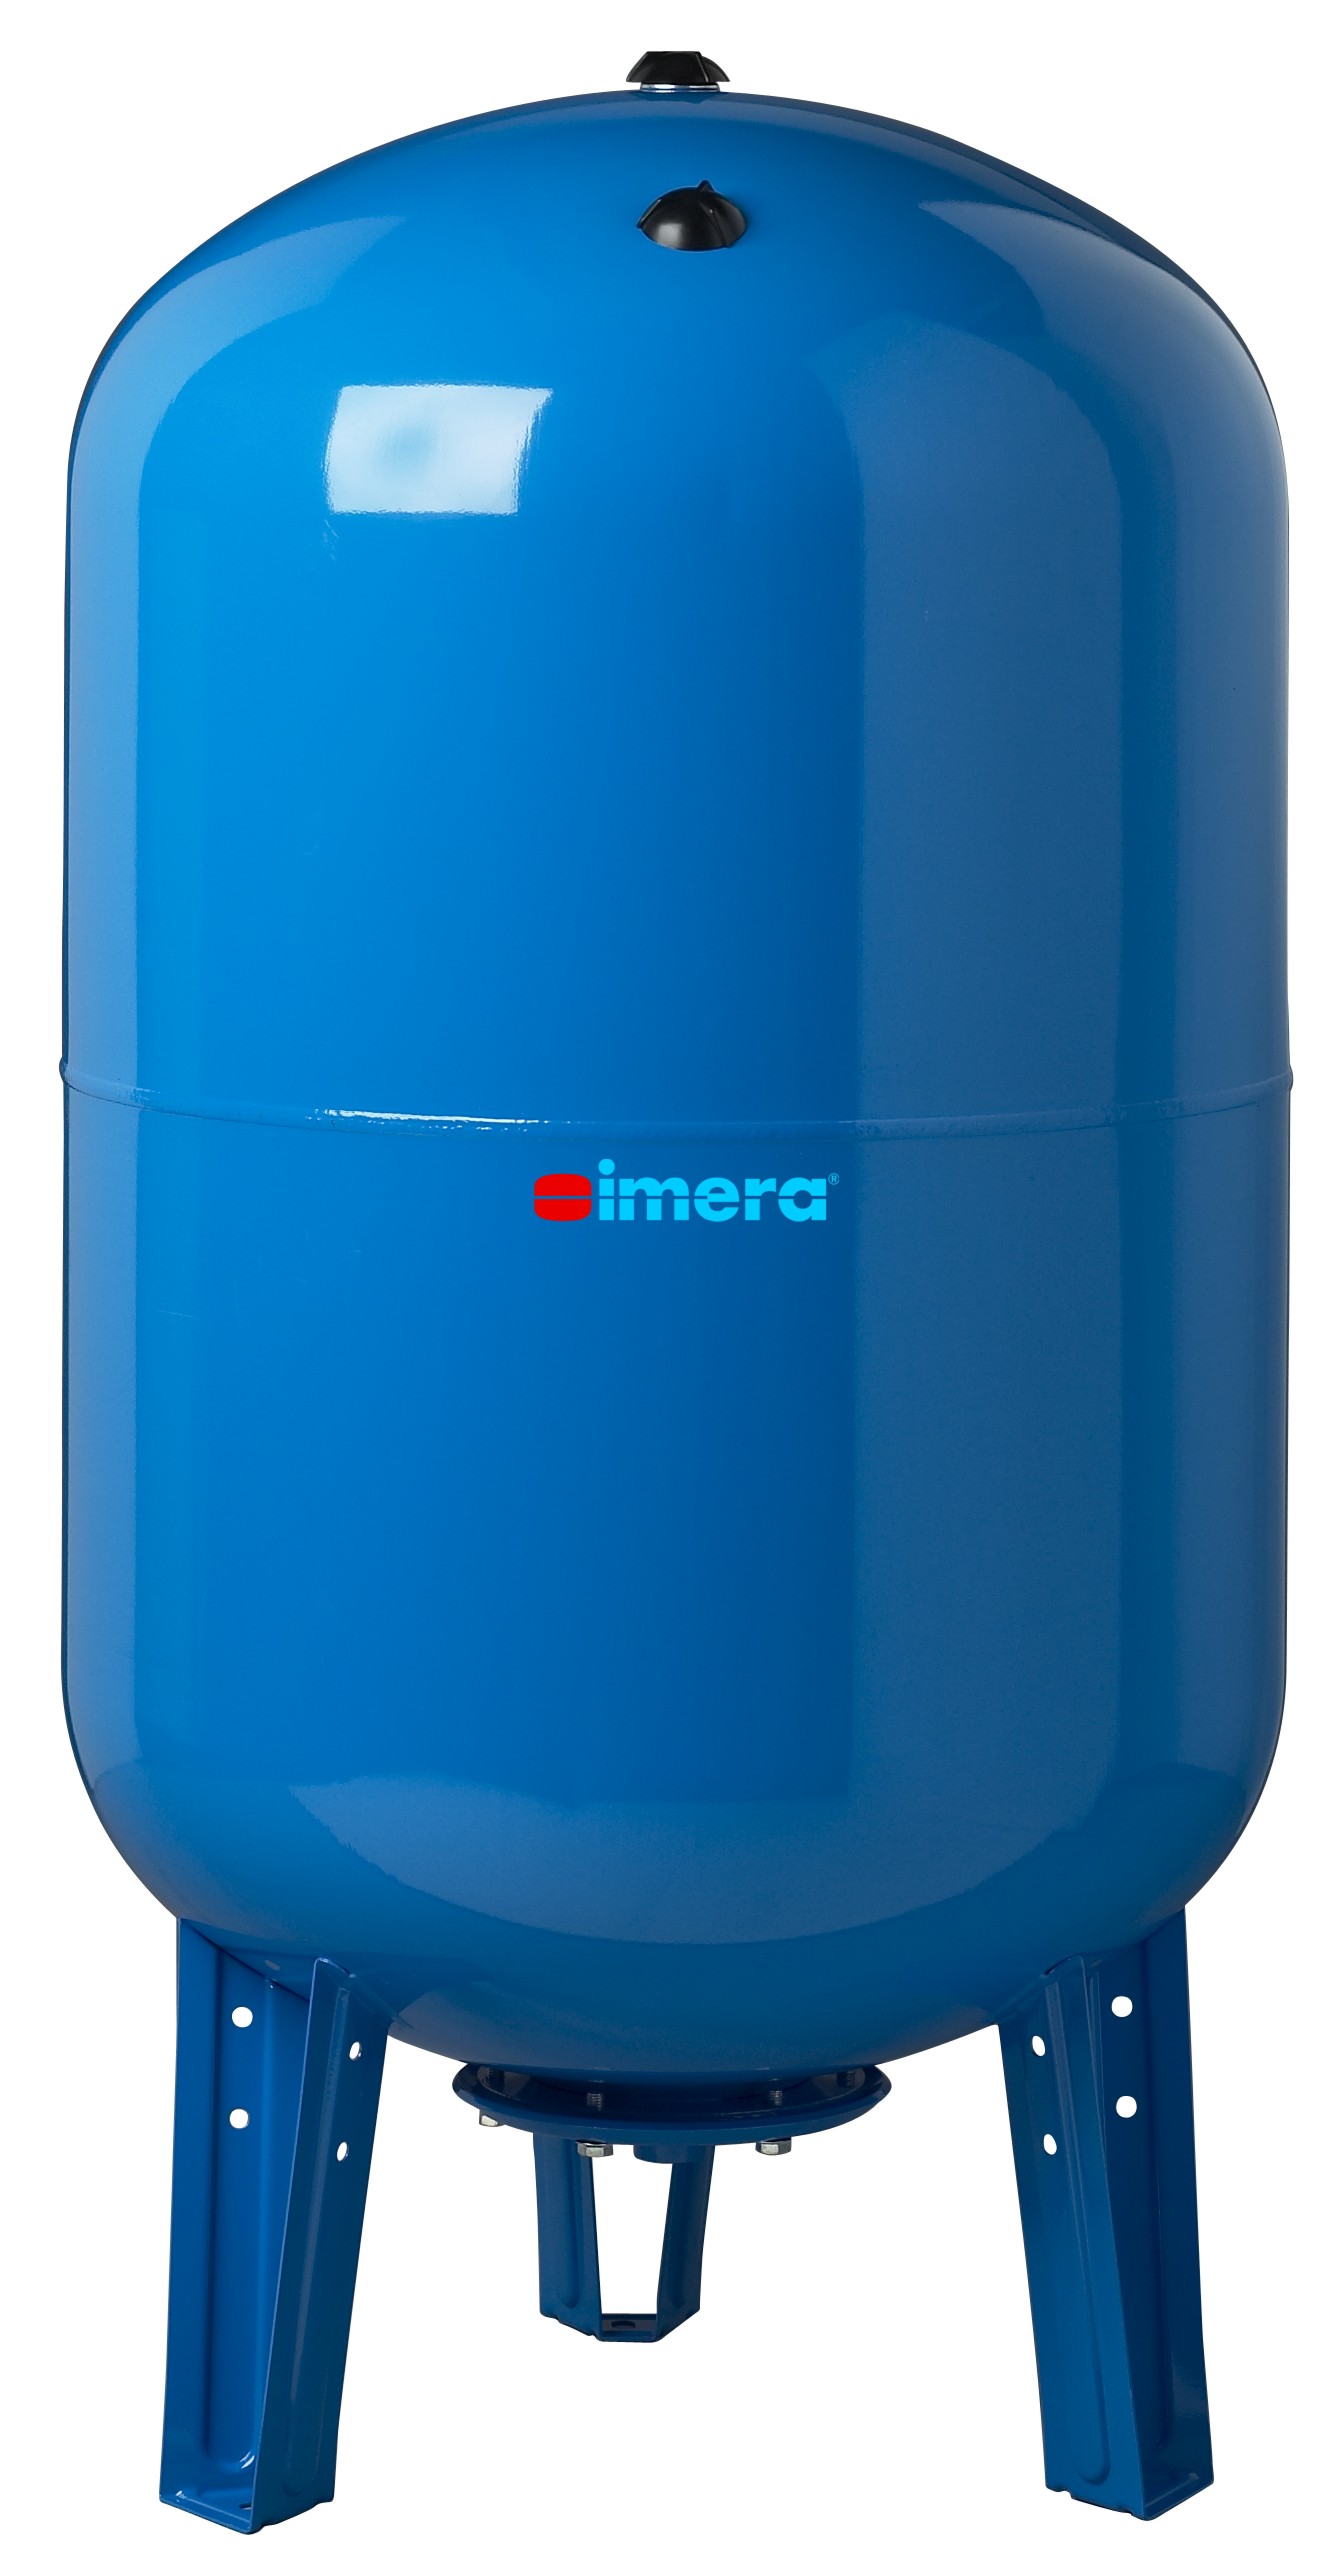 Pressure tank Imera AV50 - Komforts.net | EVASAT